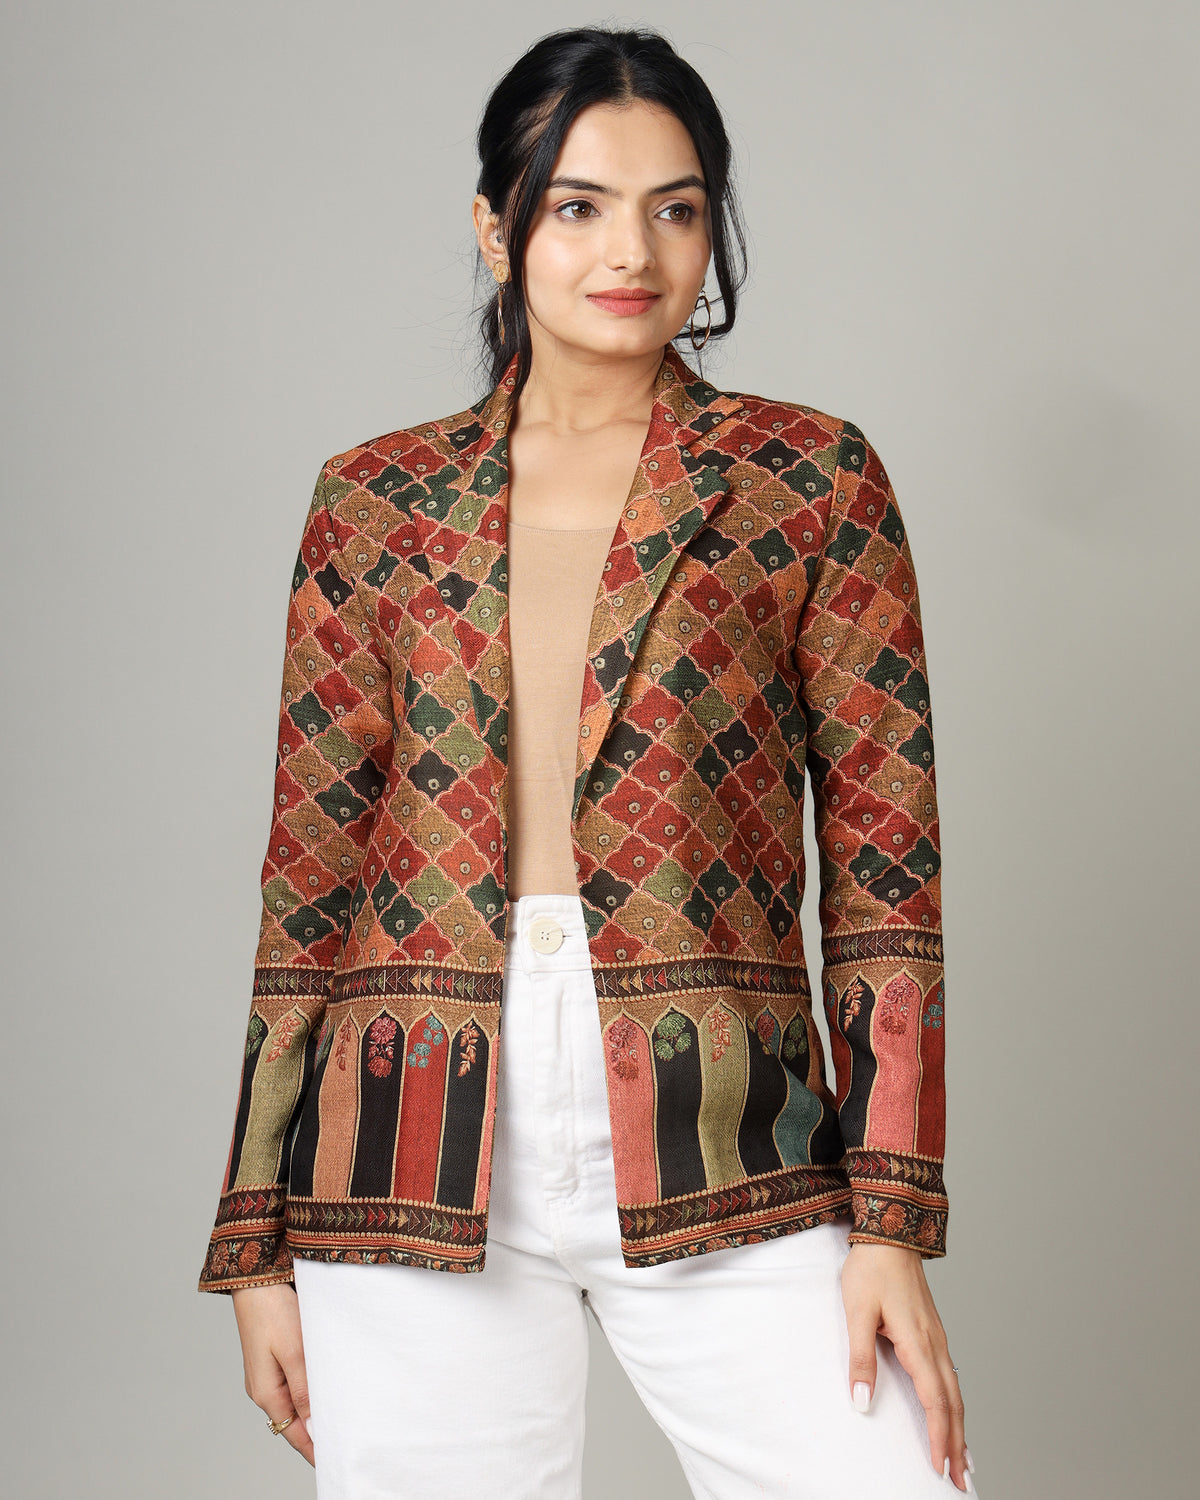 Introducing Make To Order Ethnic Women's Jacket